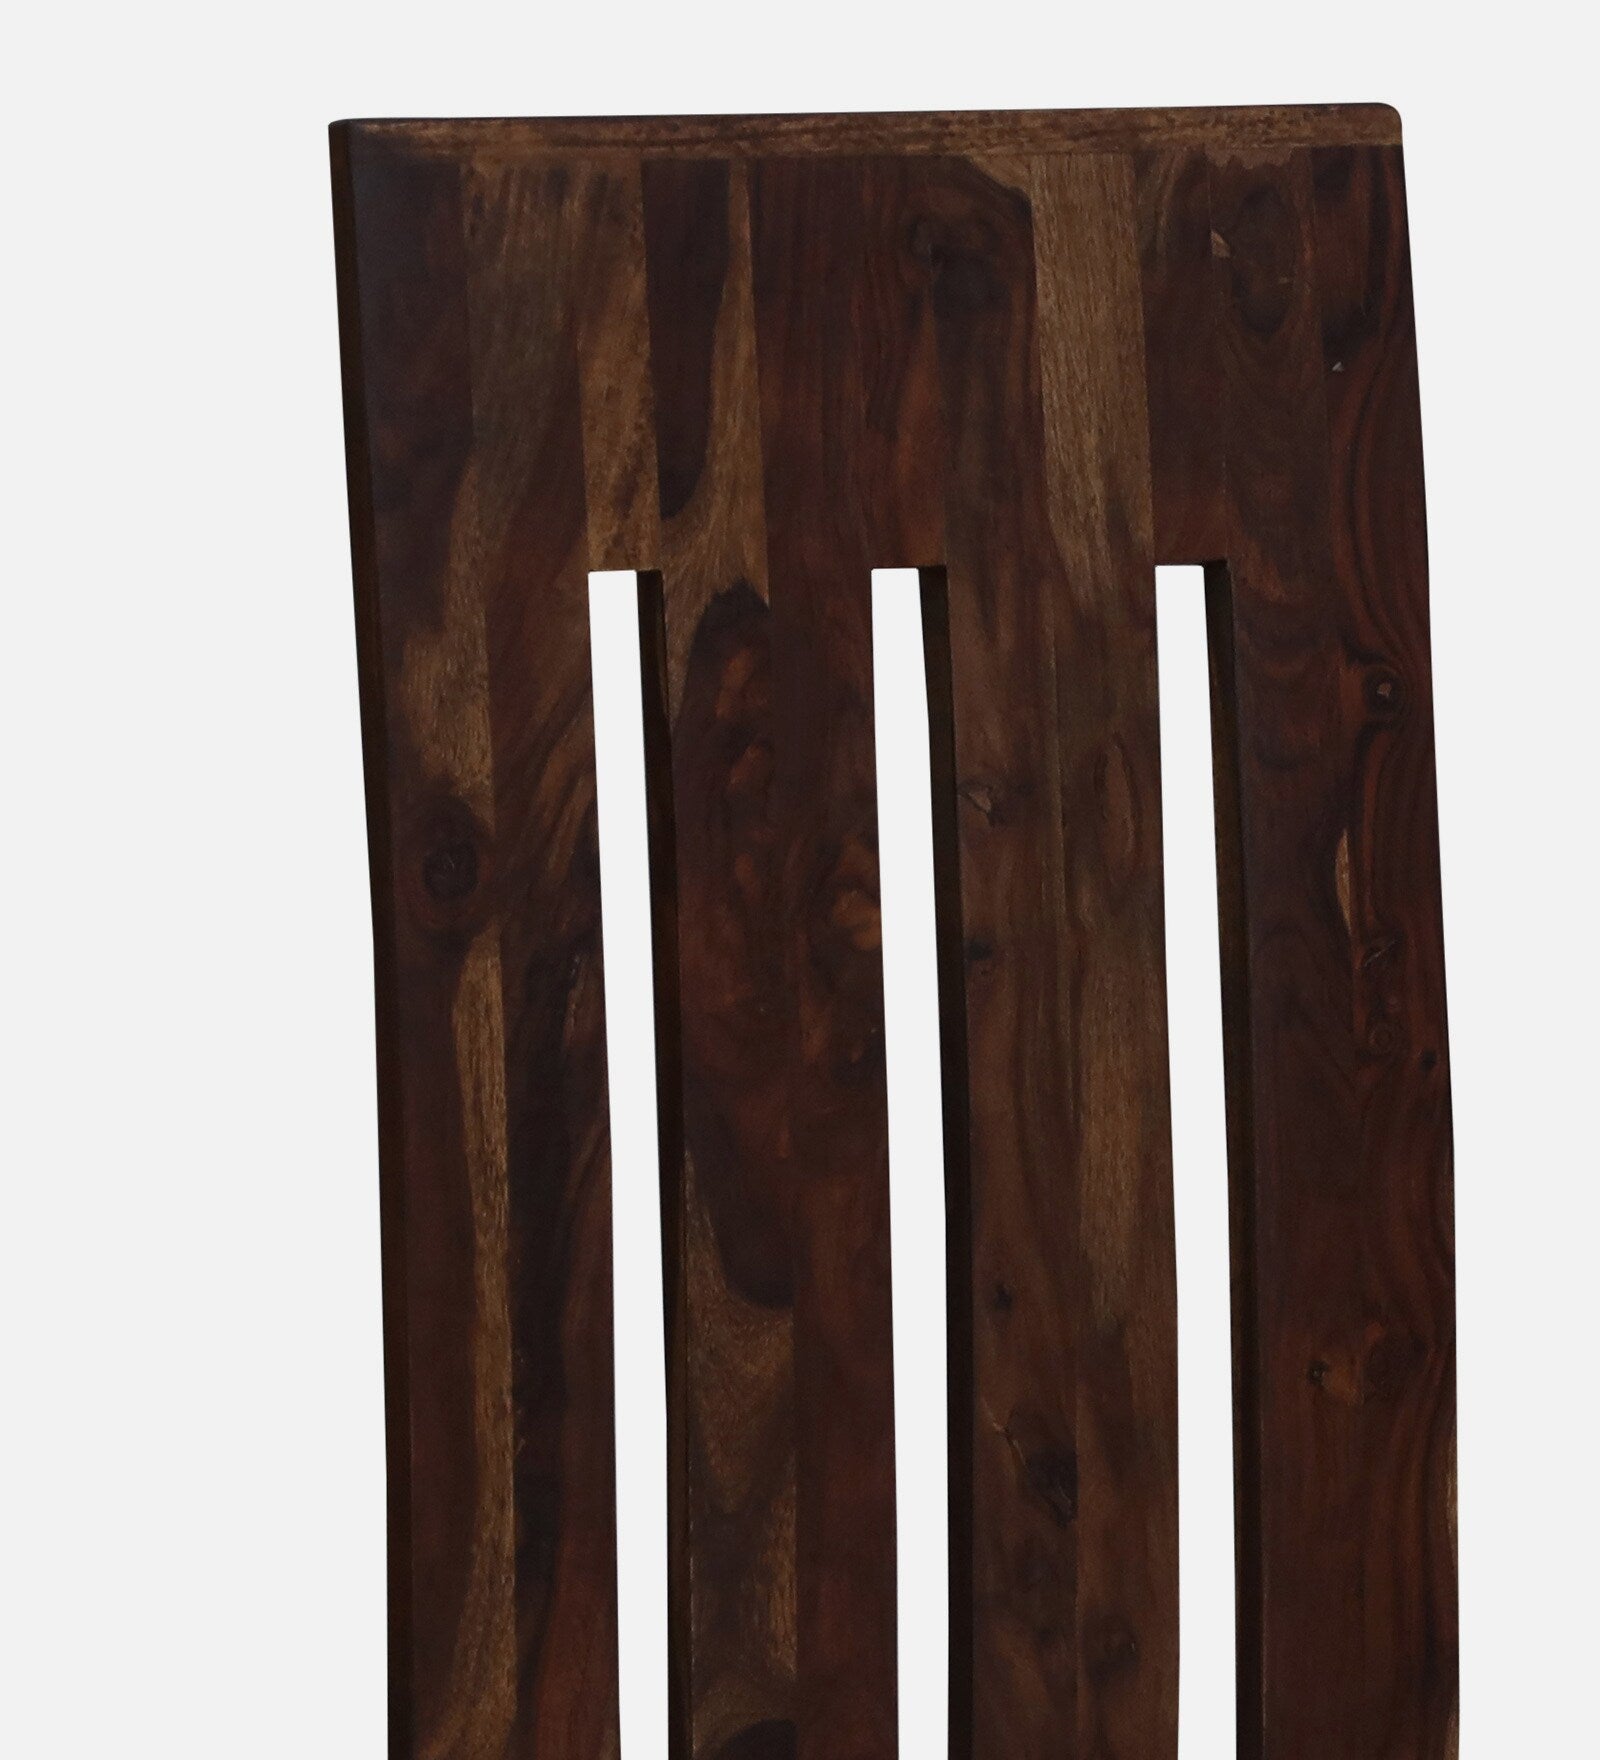 Oneil Solid Wood 6 Seater Dining Set with Bench In Provinical Teak Finish By Rajwada - Rajwada Furnish